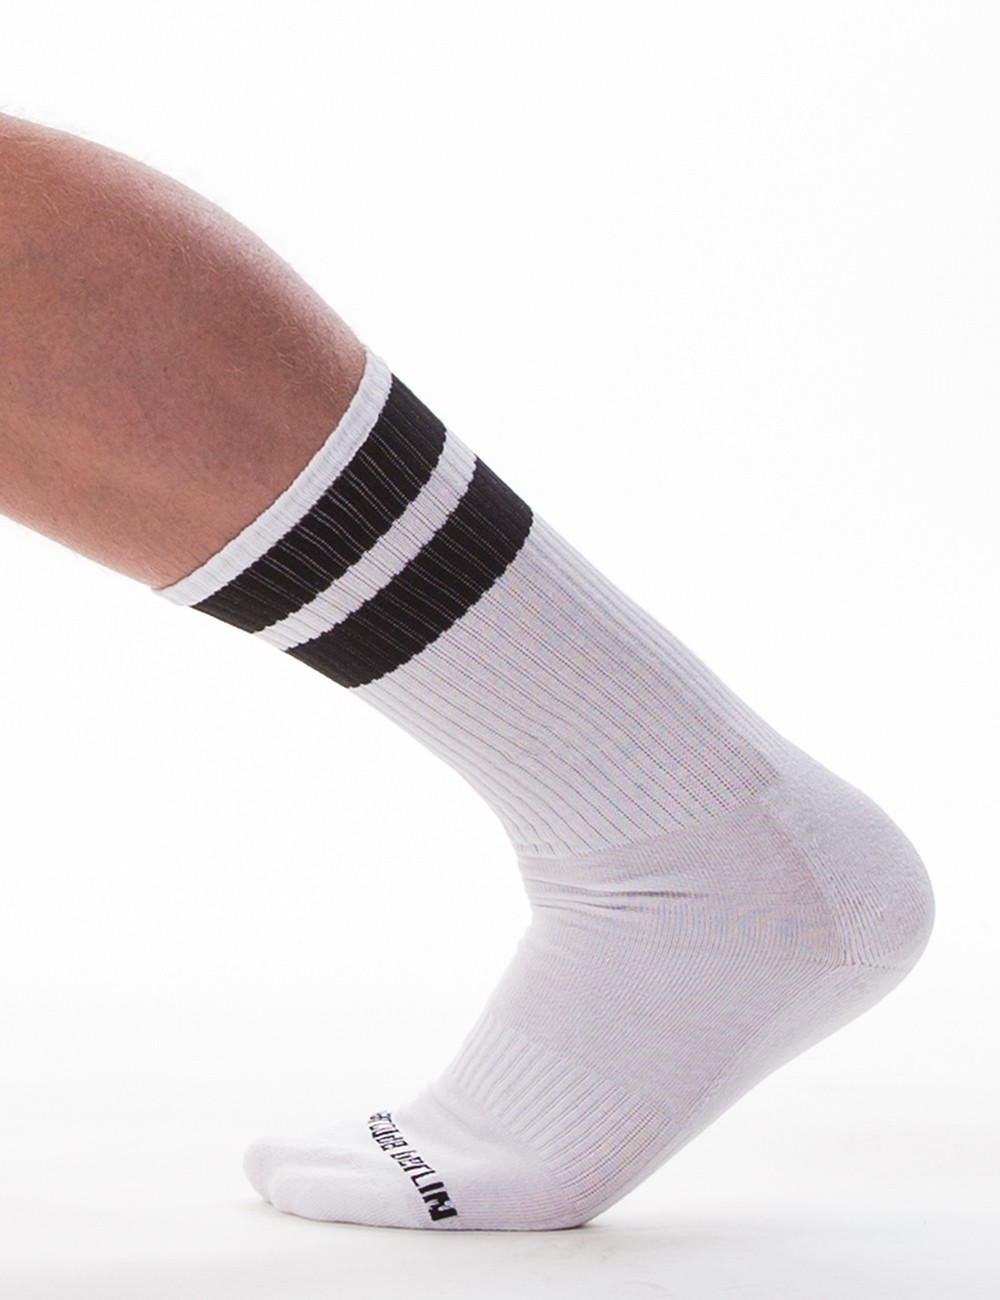 Barcode Berlin Identity Football Socks Bottom white / black [BC90941WHT]